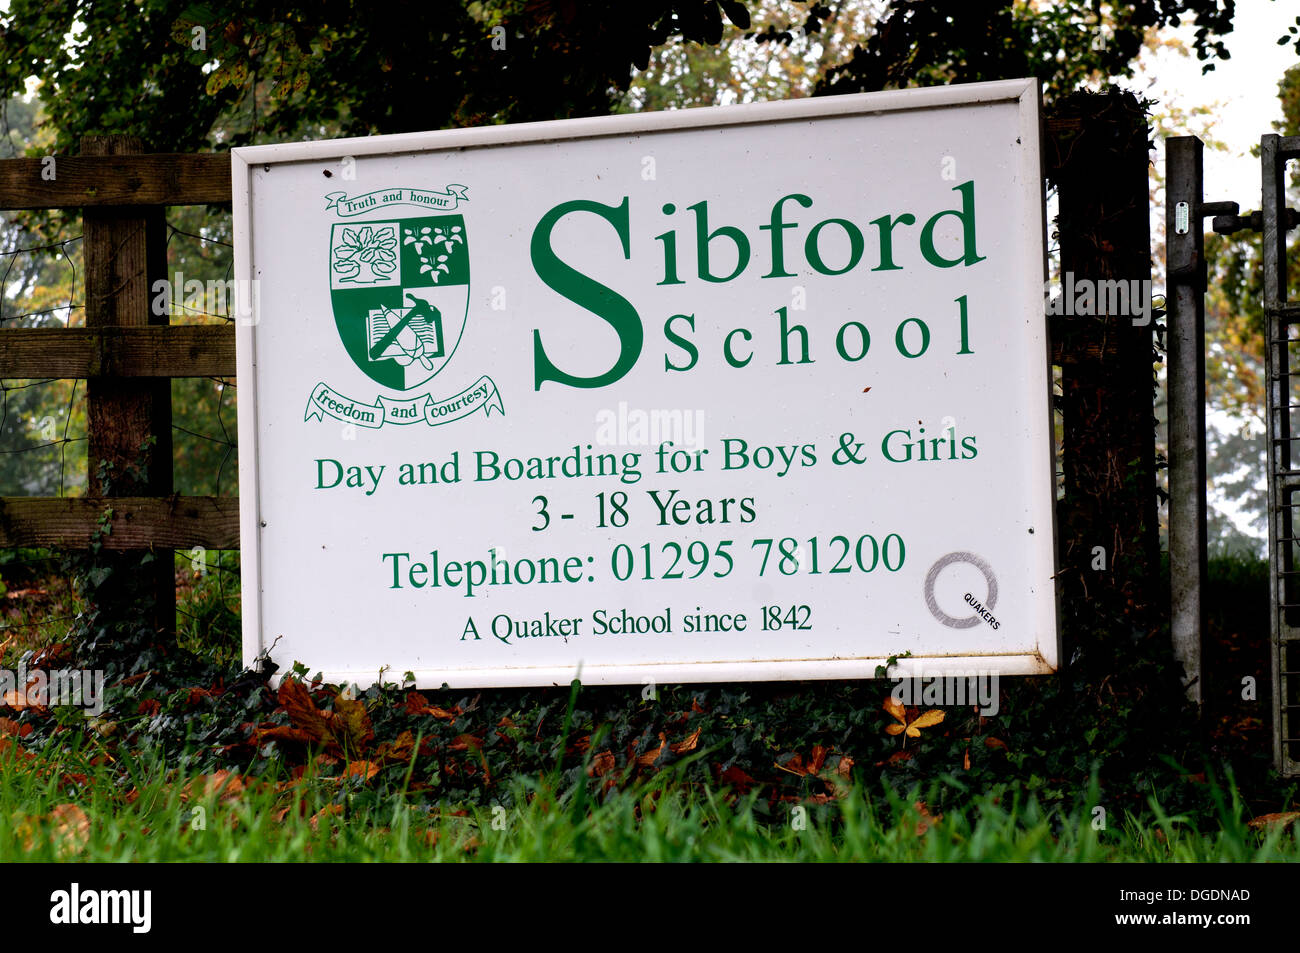 Sibford School sign, Oxfordshire, UK Stock Photo